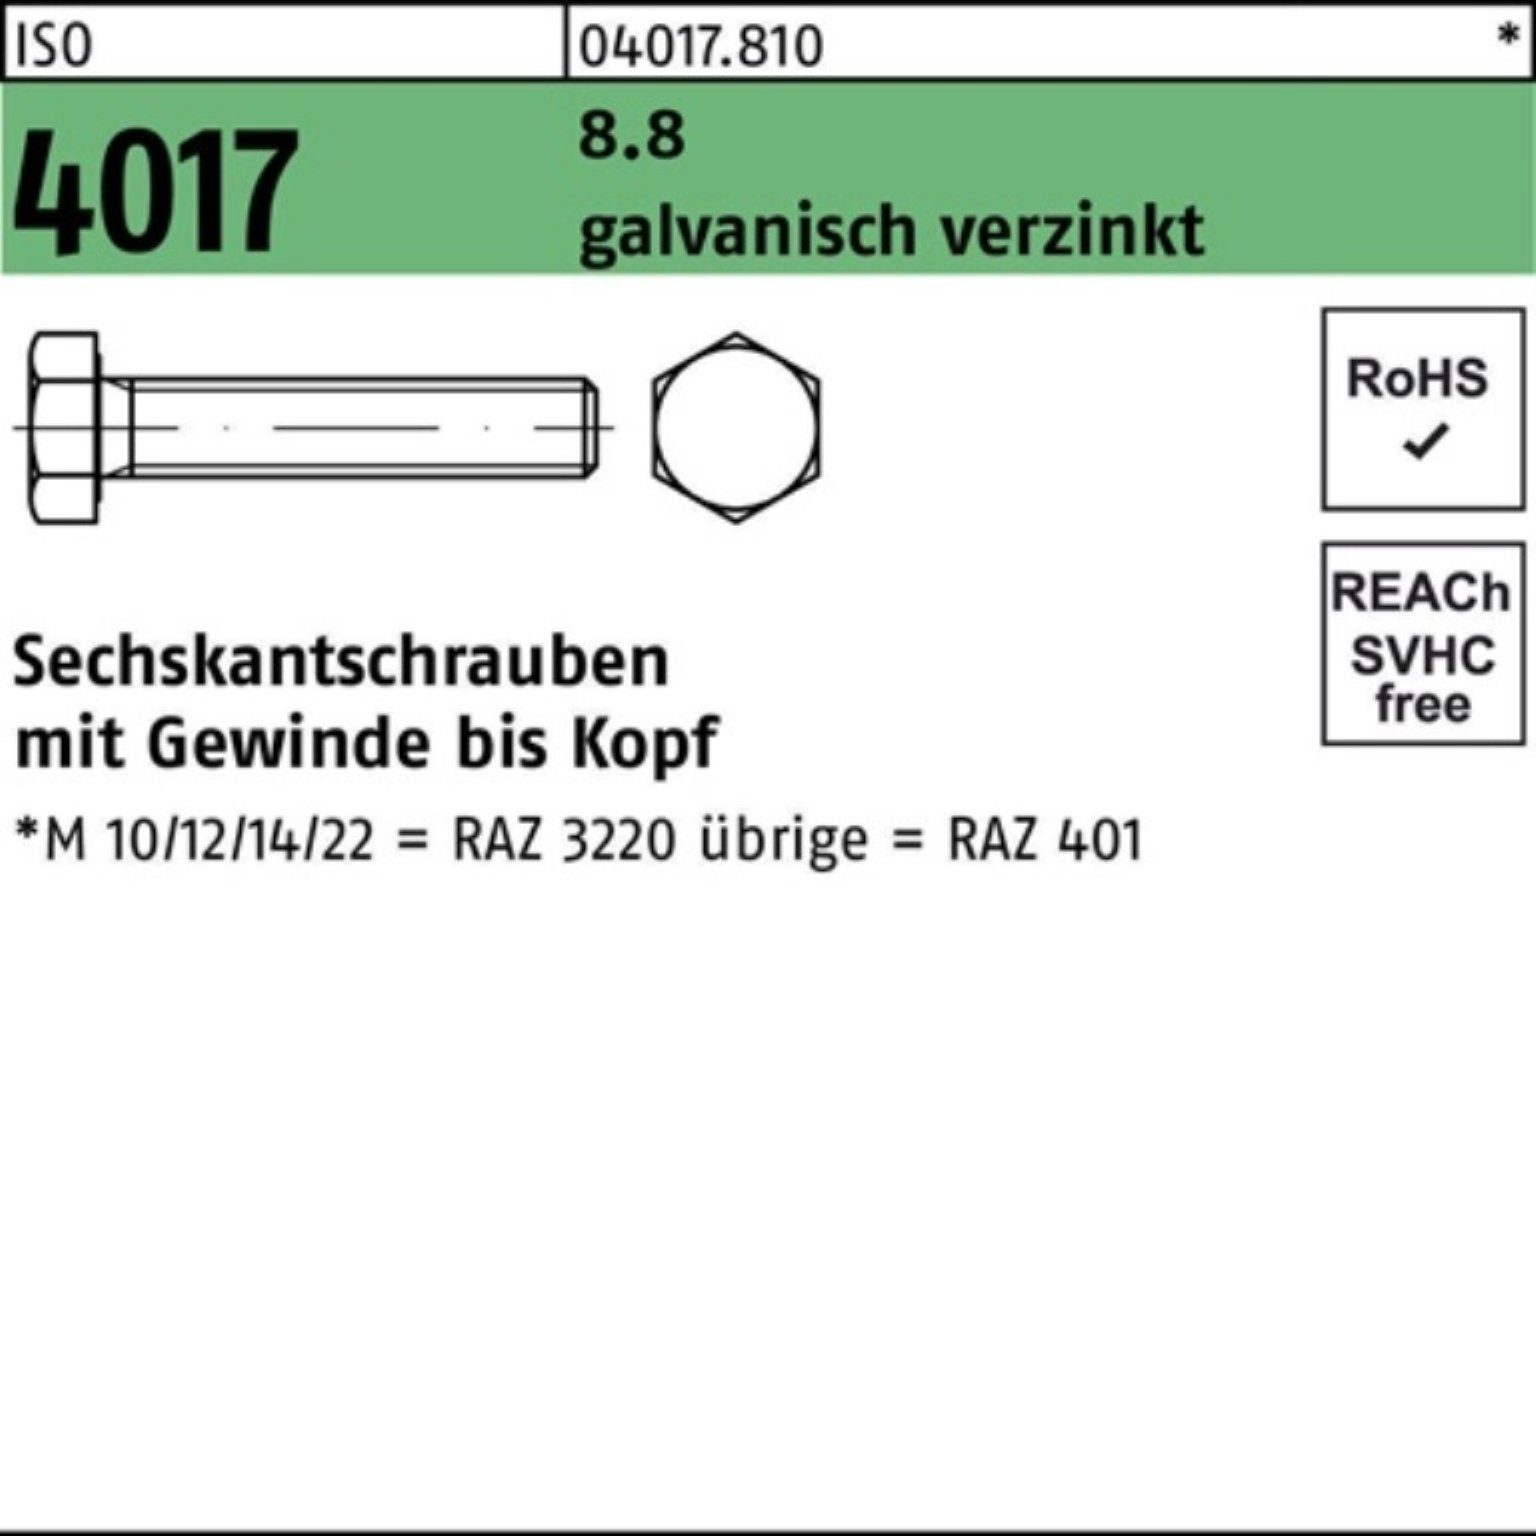 Bufab Sechskantschraube 100er Pack VG 25 8.8 ISO St Sechskantschraube 4017 galv.verz. 50 M22x